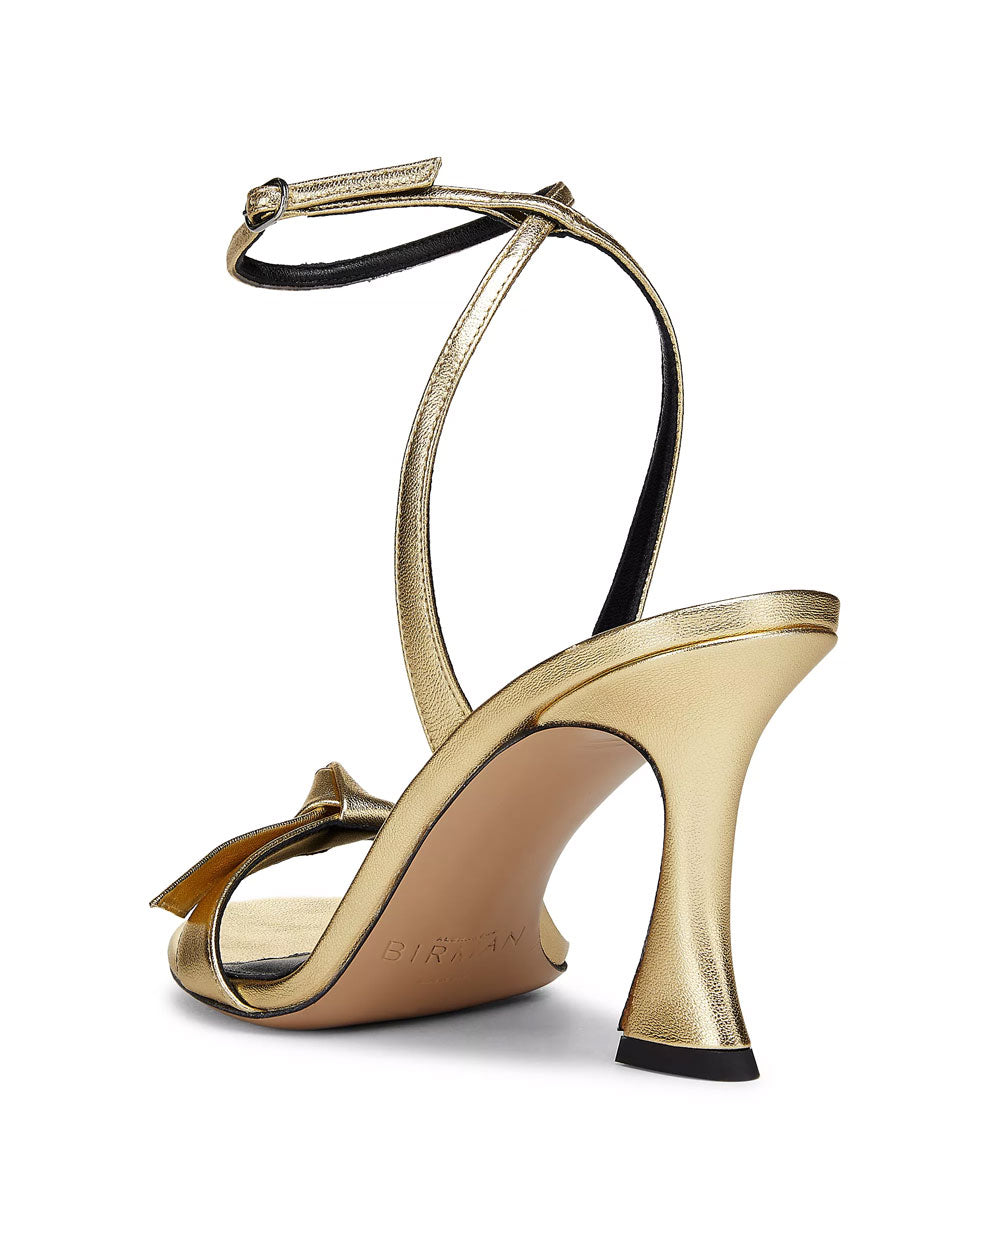 Clarita Bell 85mm Sandal in Golden